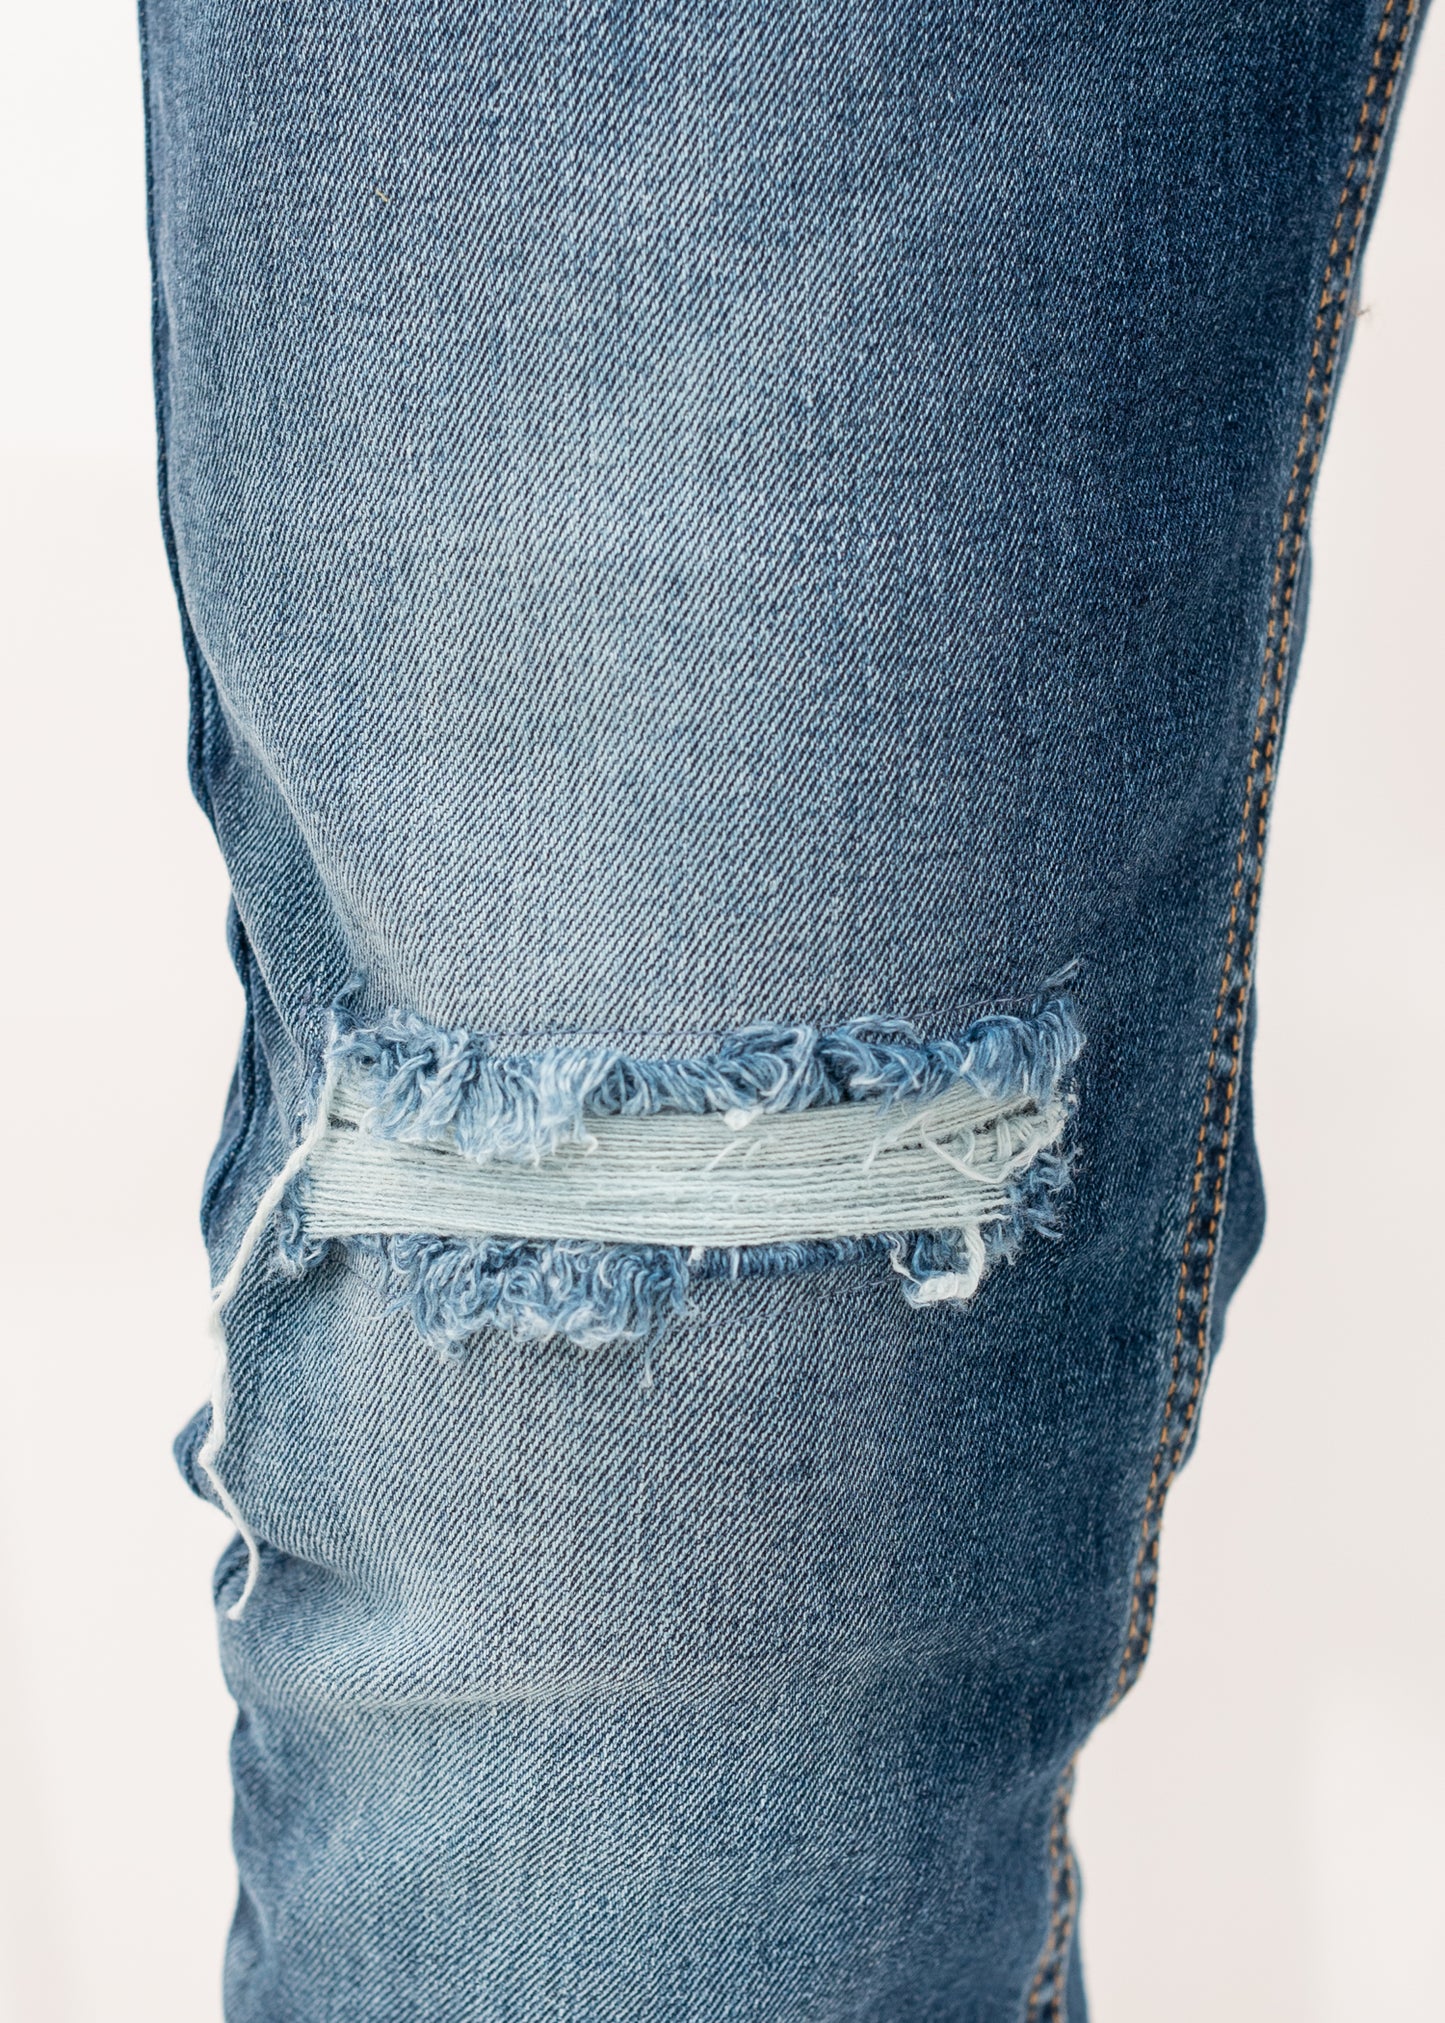 Jeans rotture LAVD32